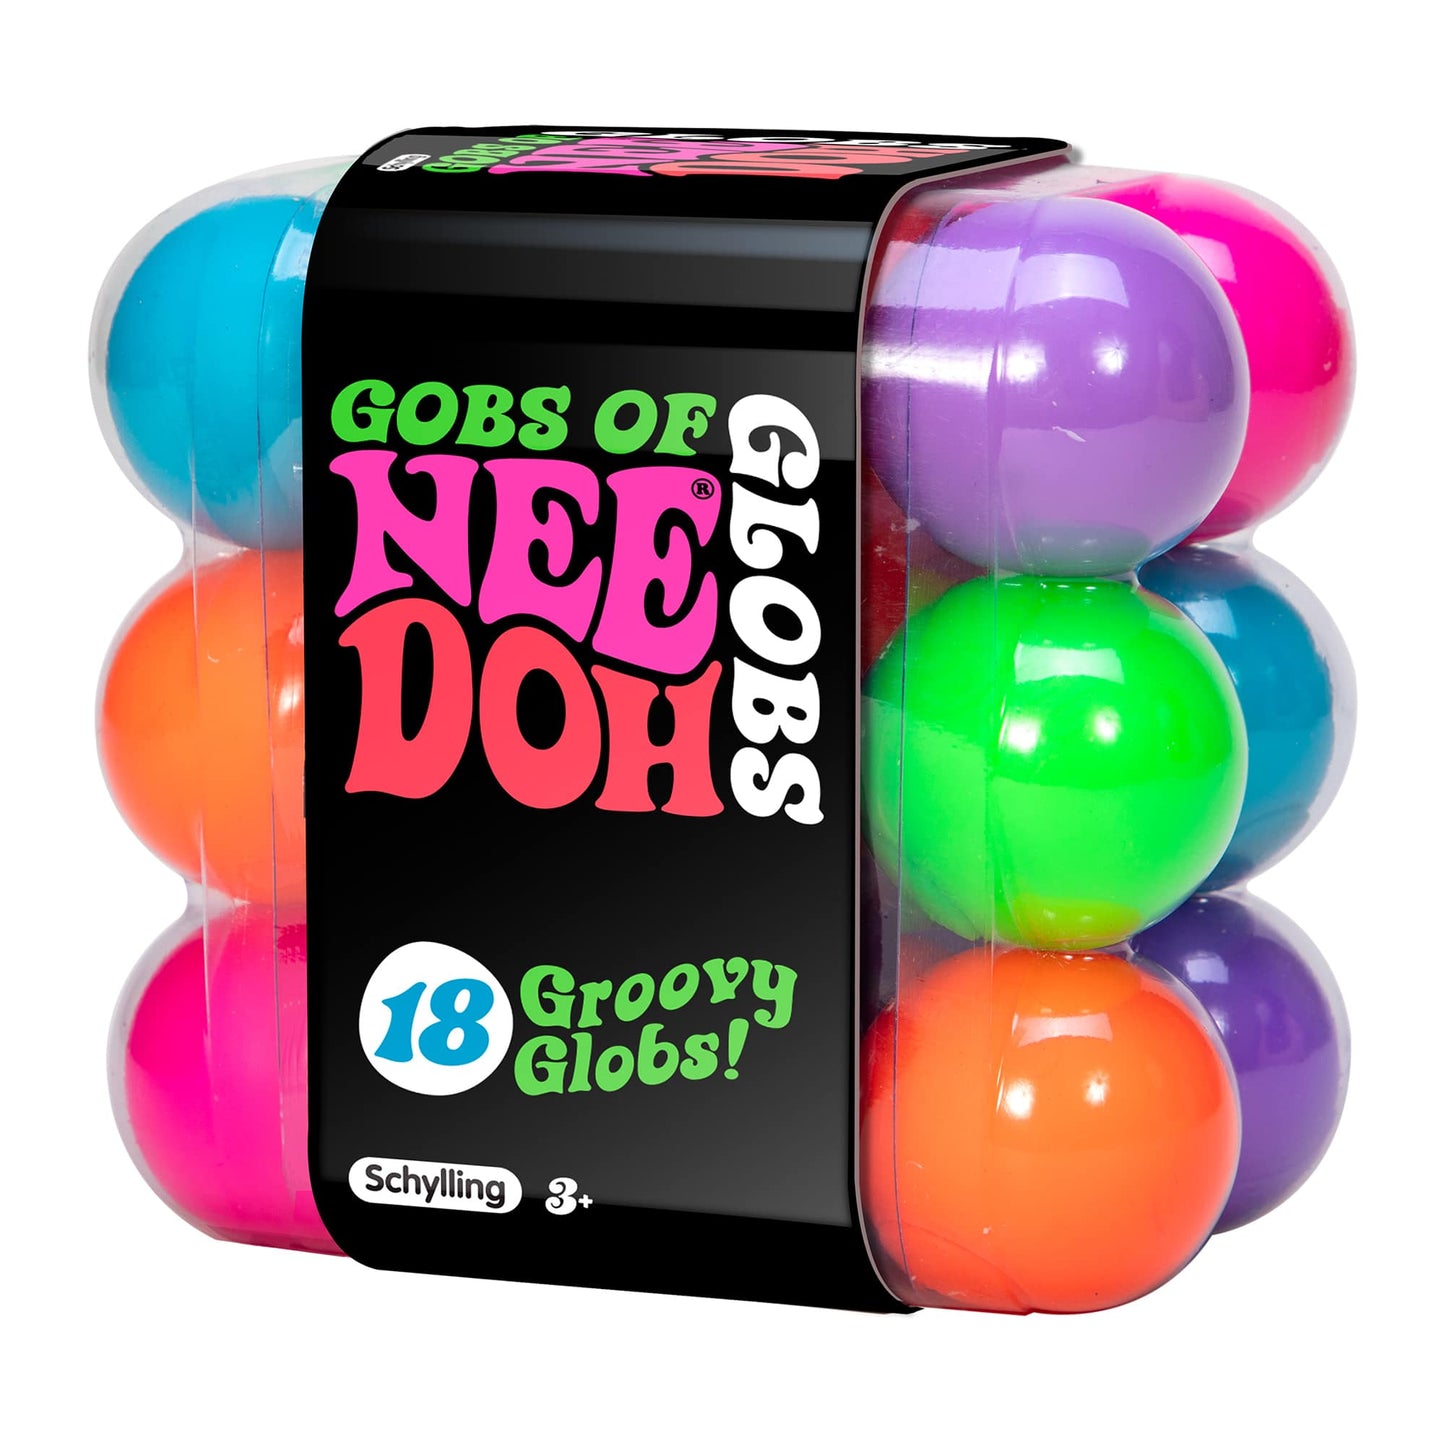 Globs of Nee Doh